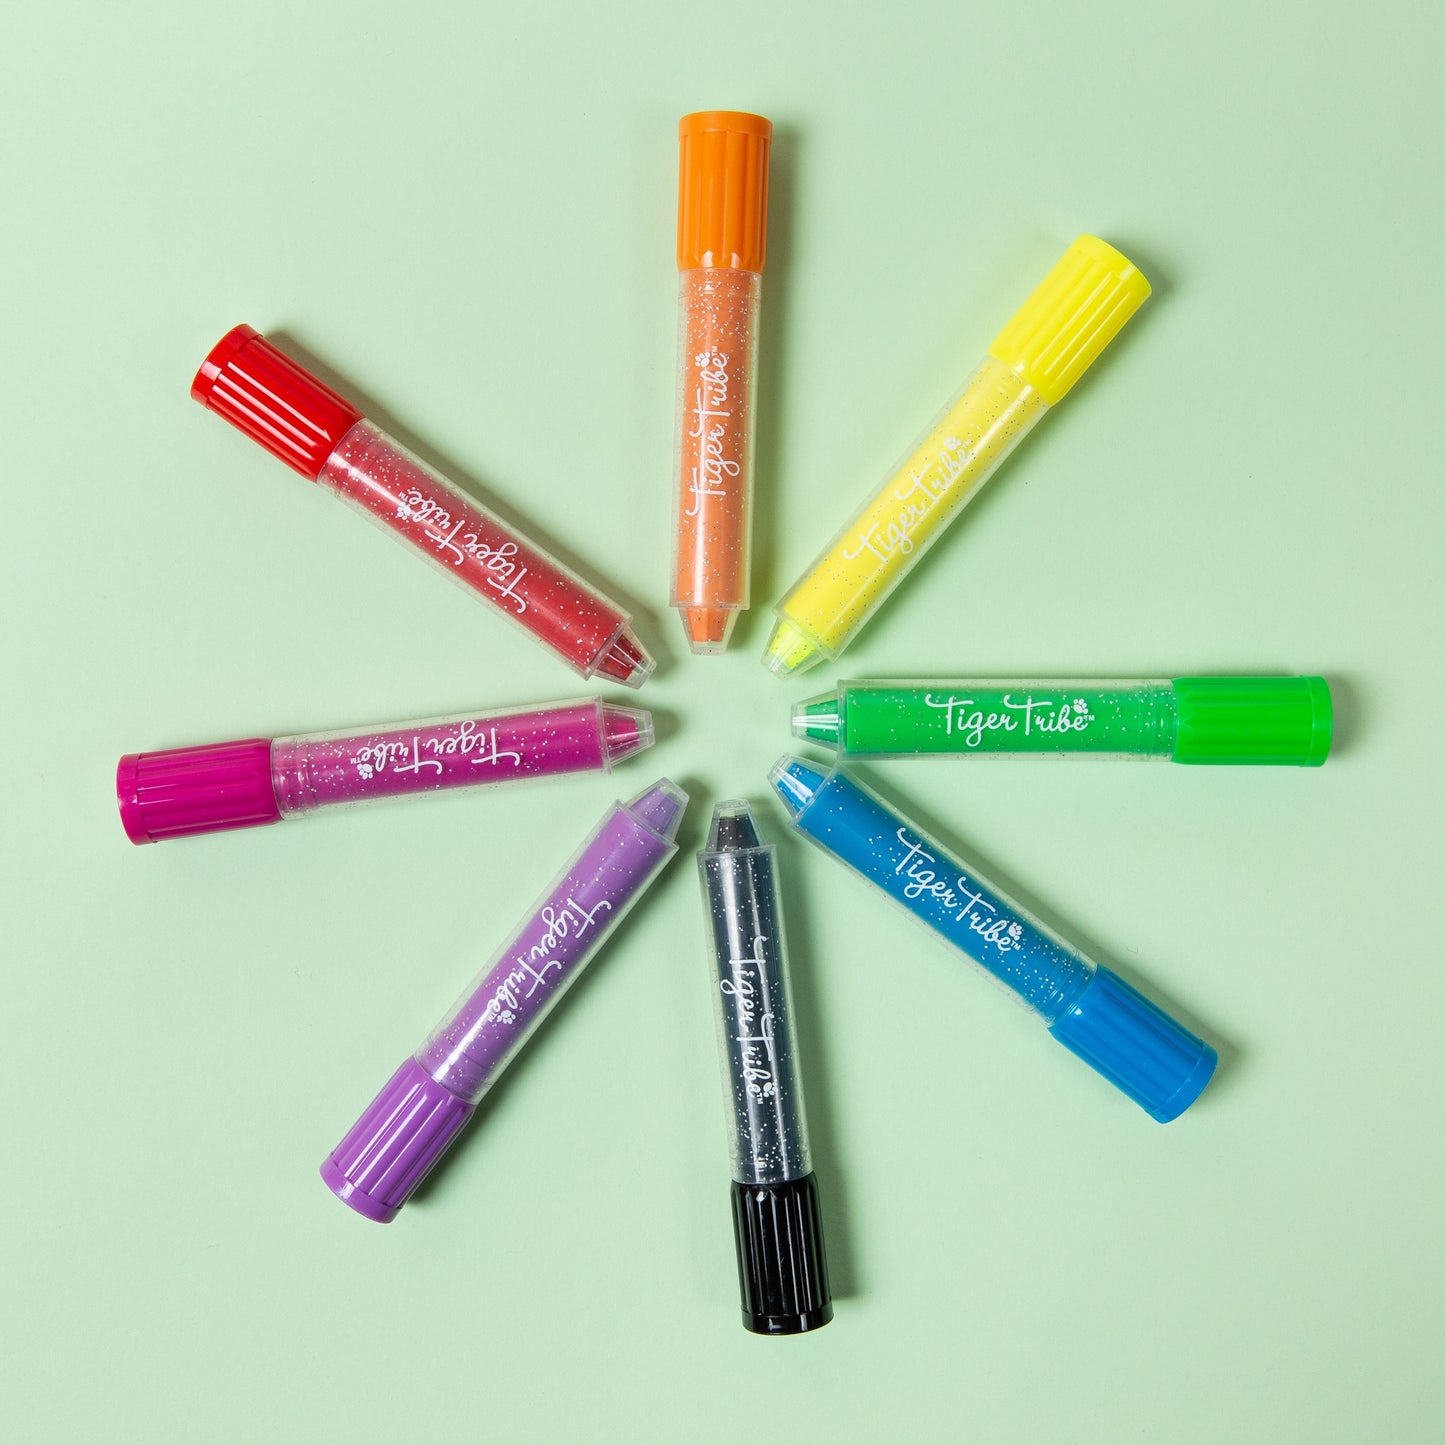 Silk Crayons  - Doodlebug's Children's Boutique